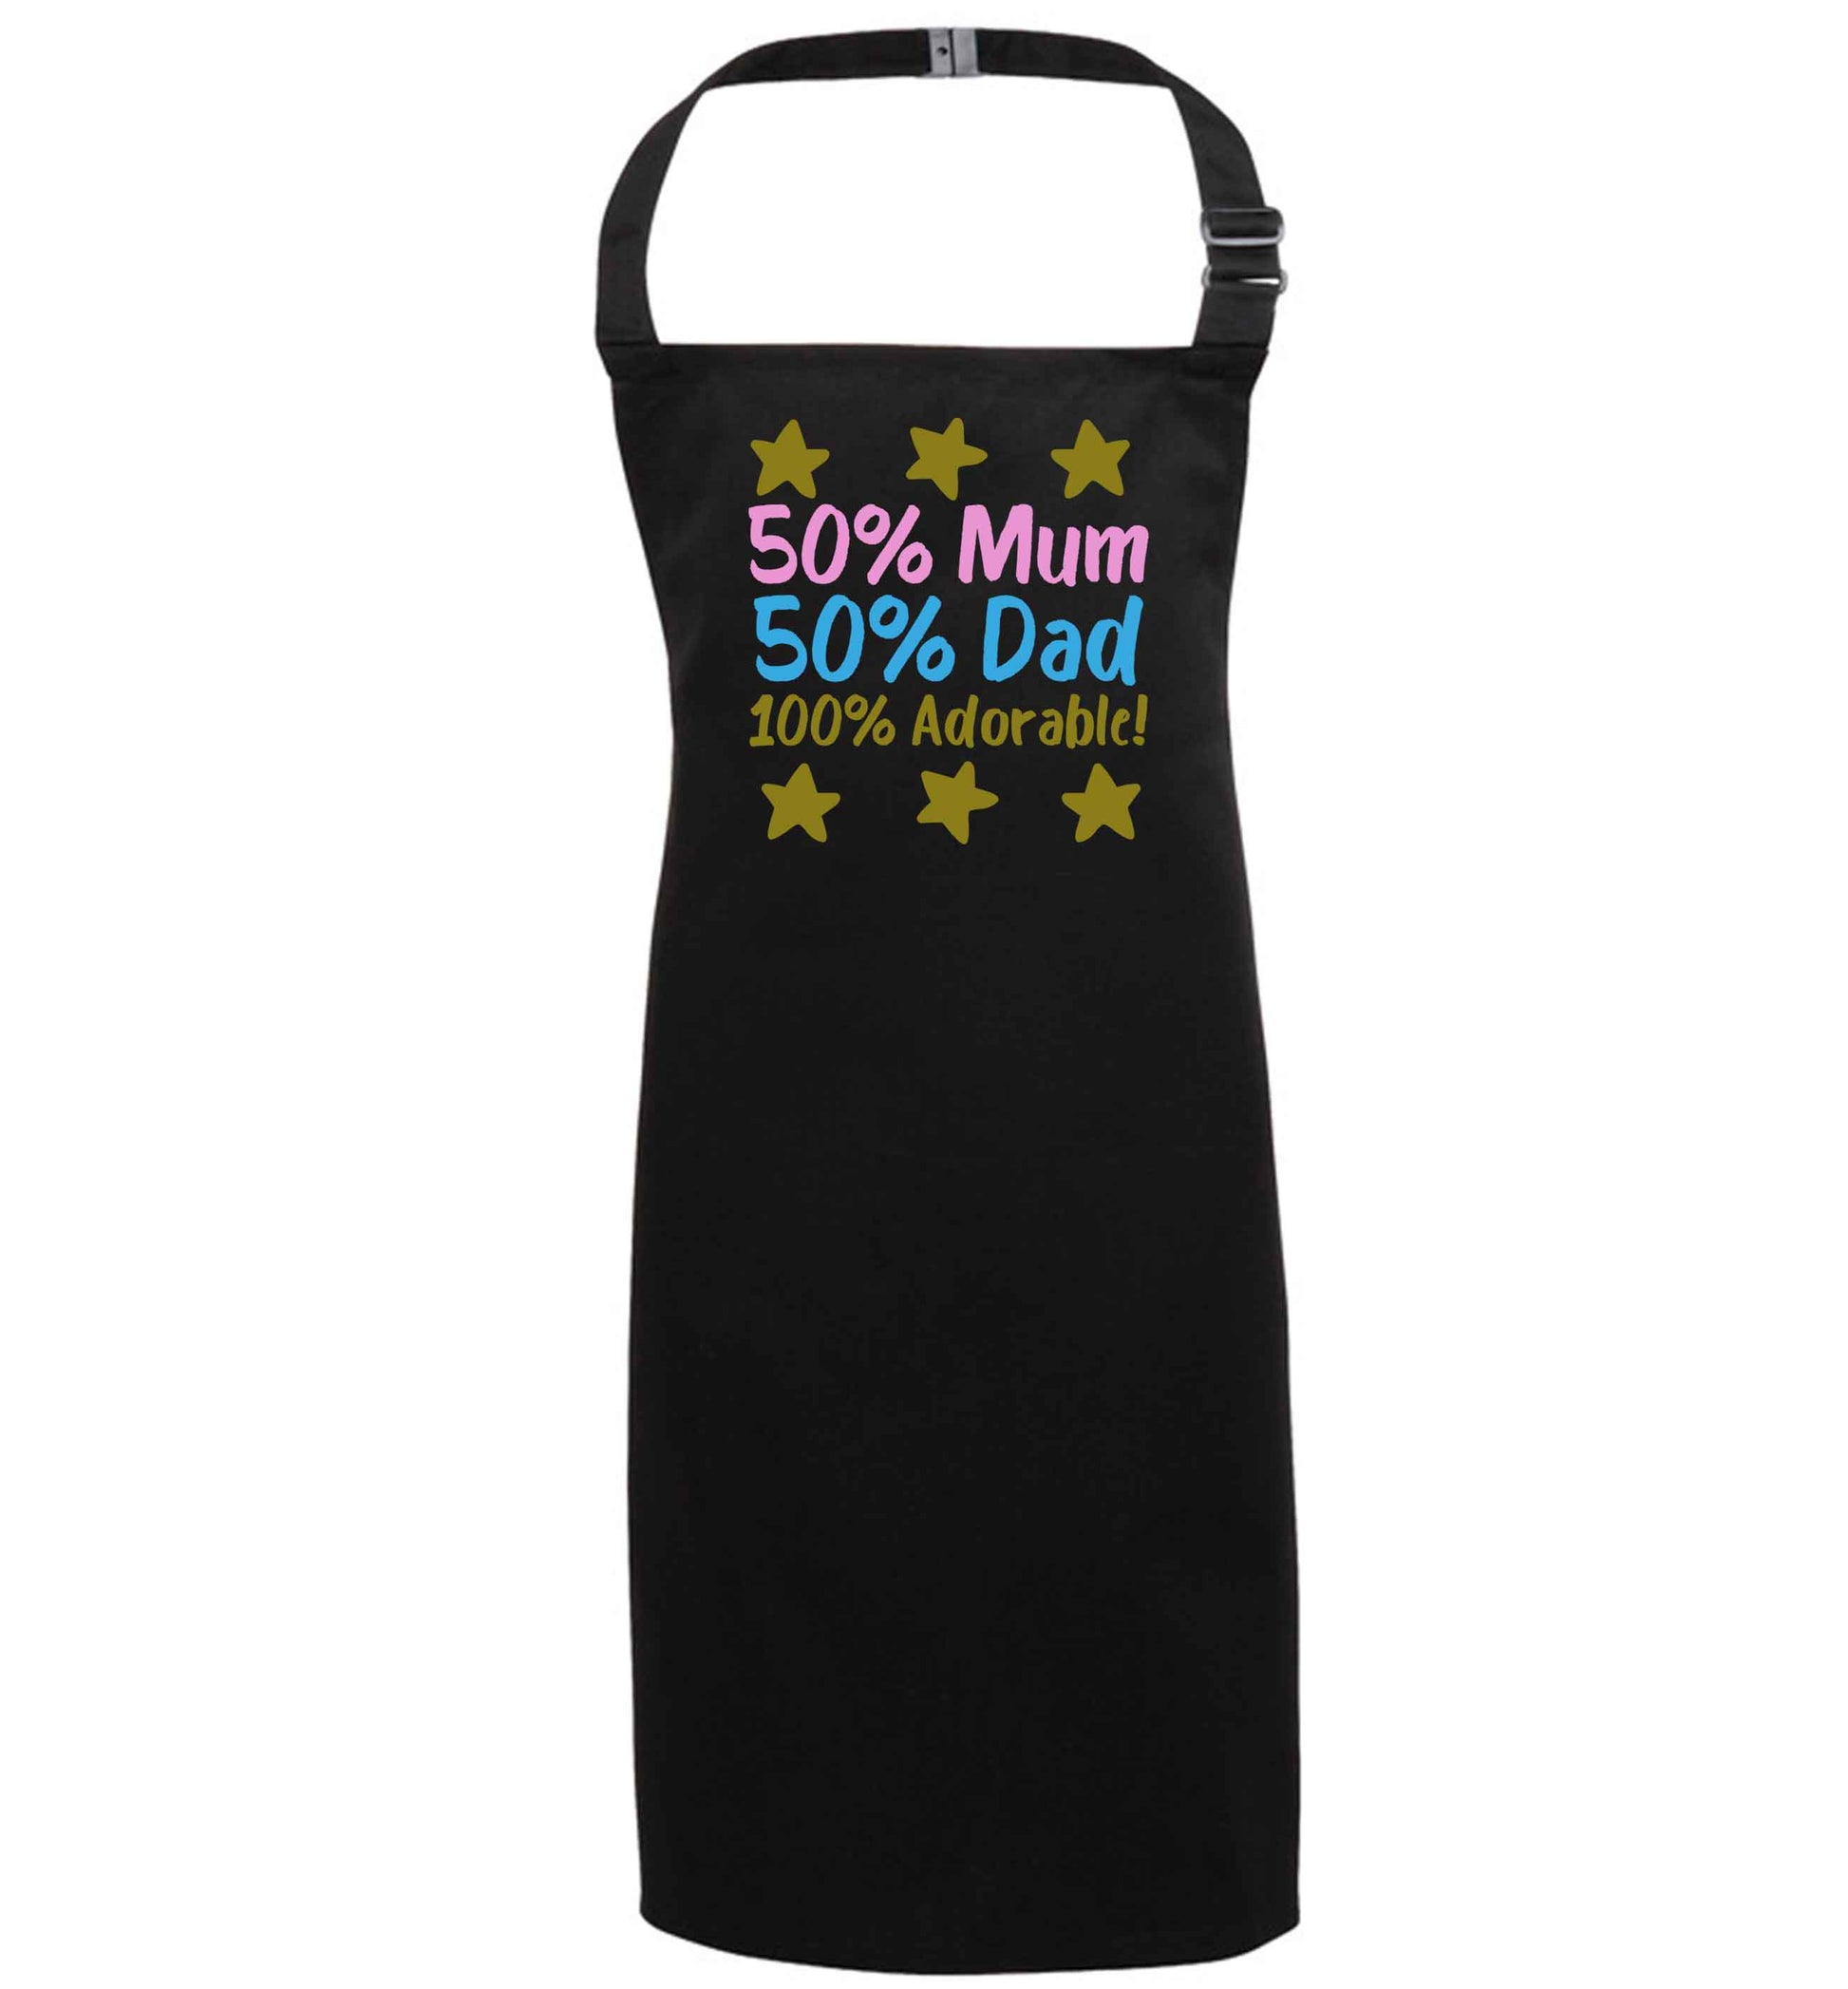 50% mum 50% dad 100% adorable black apron 7-10 years